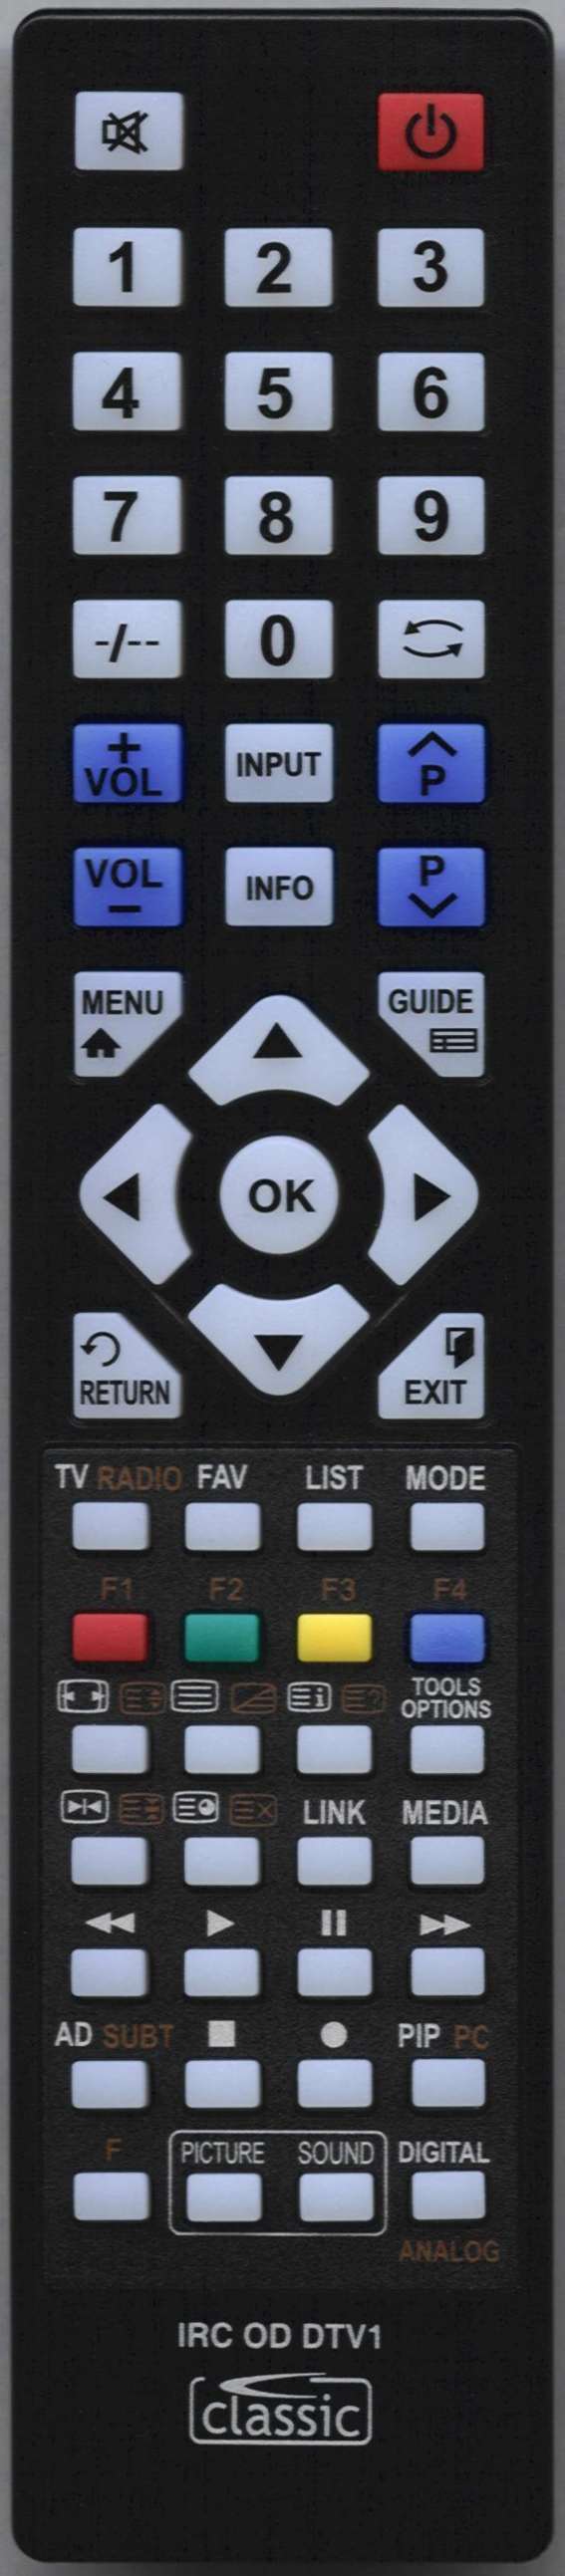 PANASONIC TX32LXD60 Remote Control Alternative